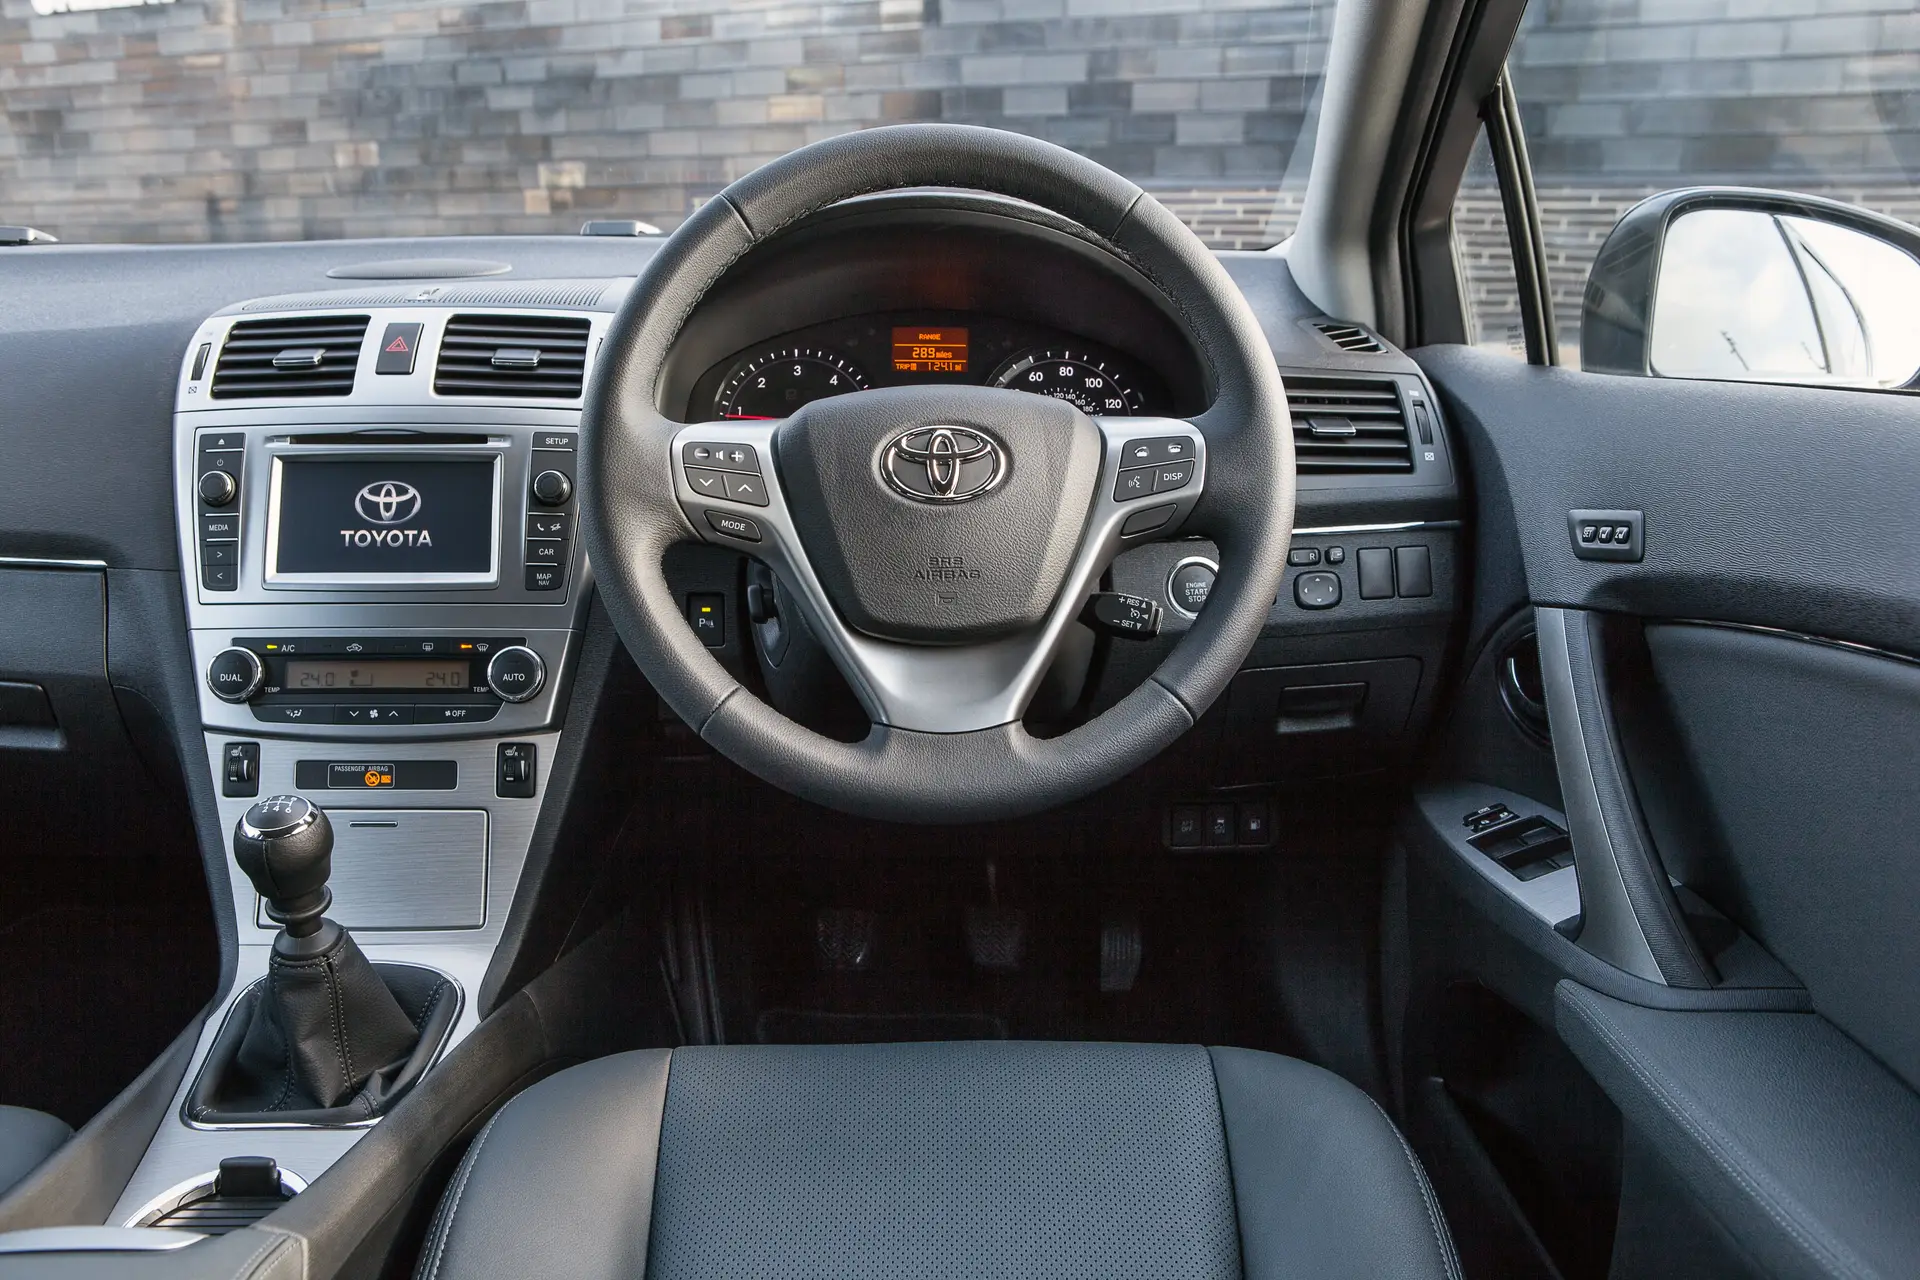 Toyota Avensis Steering Wheel